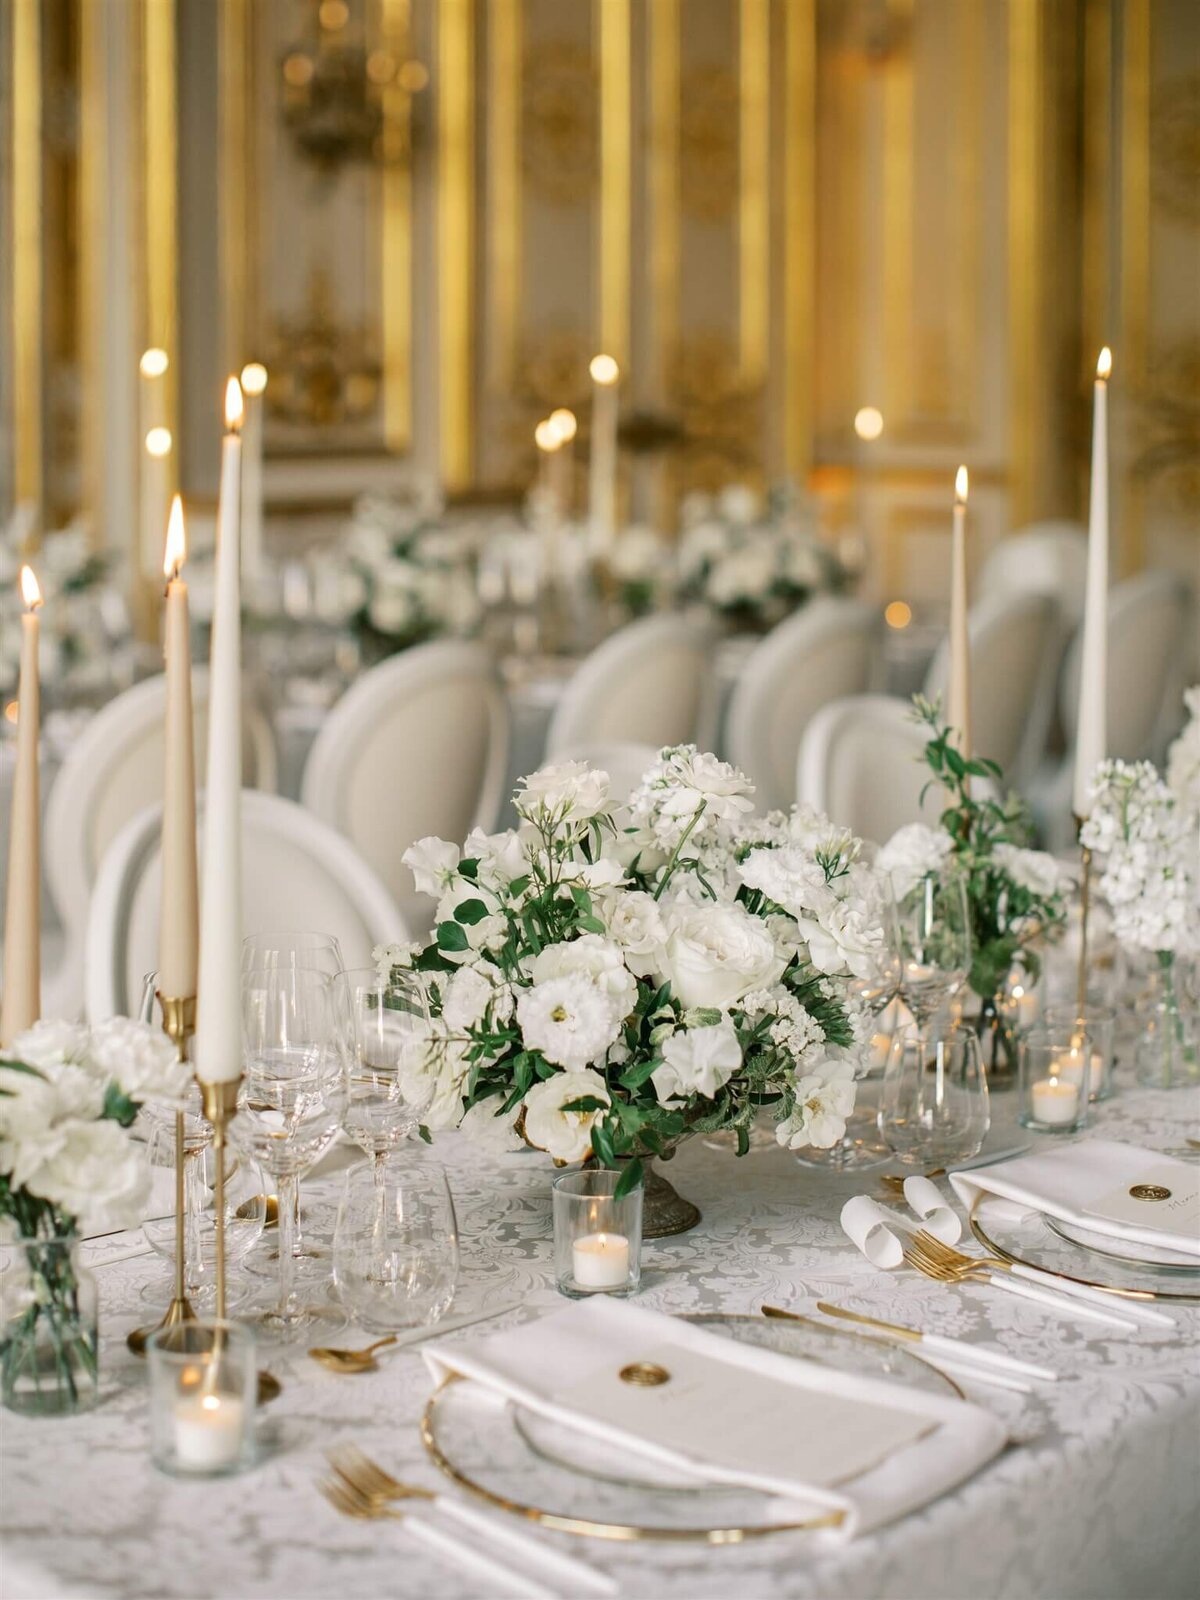 DianeSoteroPhotography_Wedding_StJamesHotel_HotelLeMarois_Paris_France_436